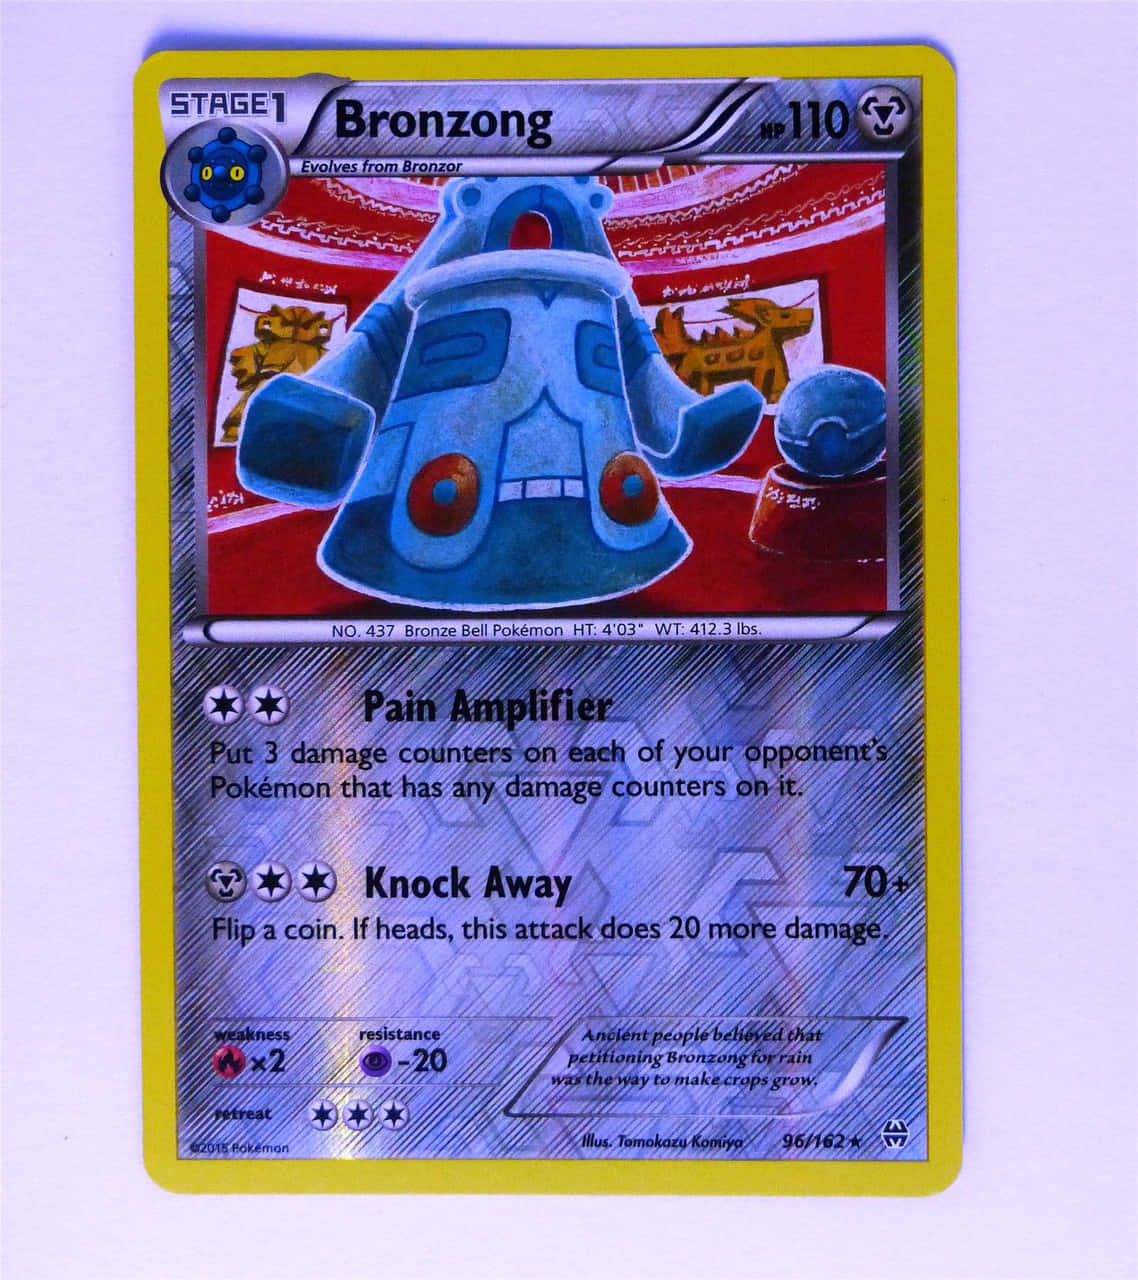 Exciting Bronzong Pokémon Trading Card Wallpaper